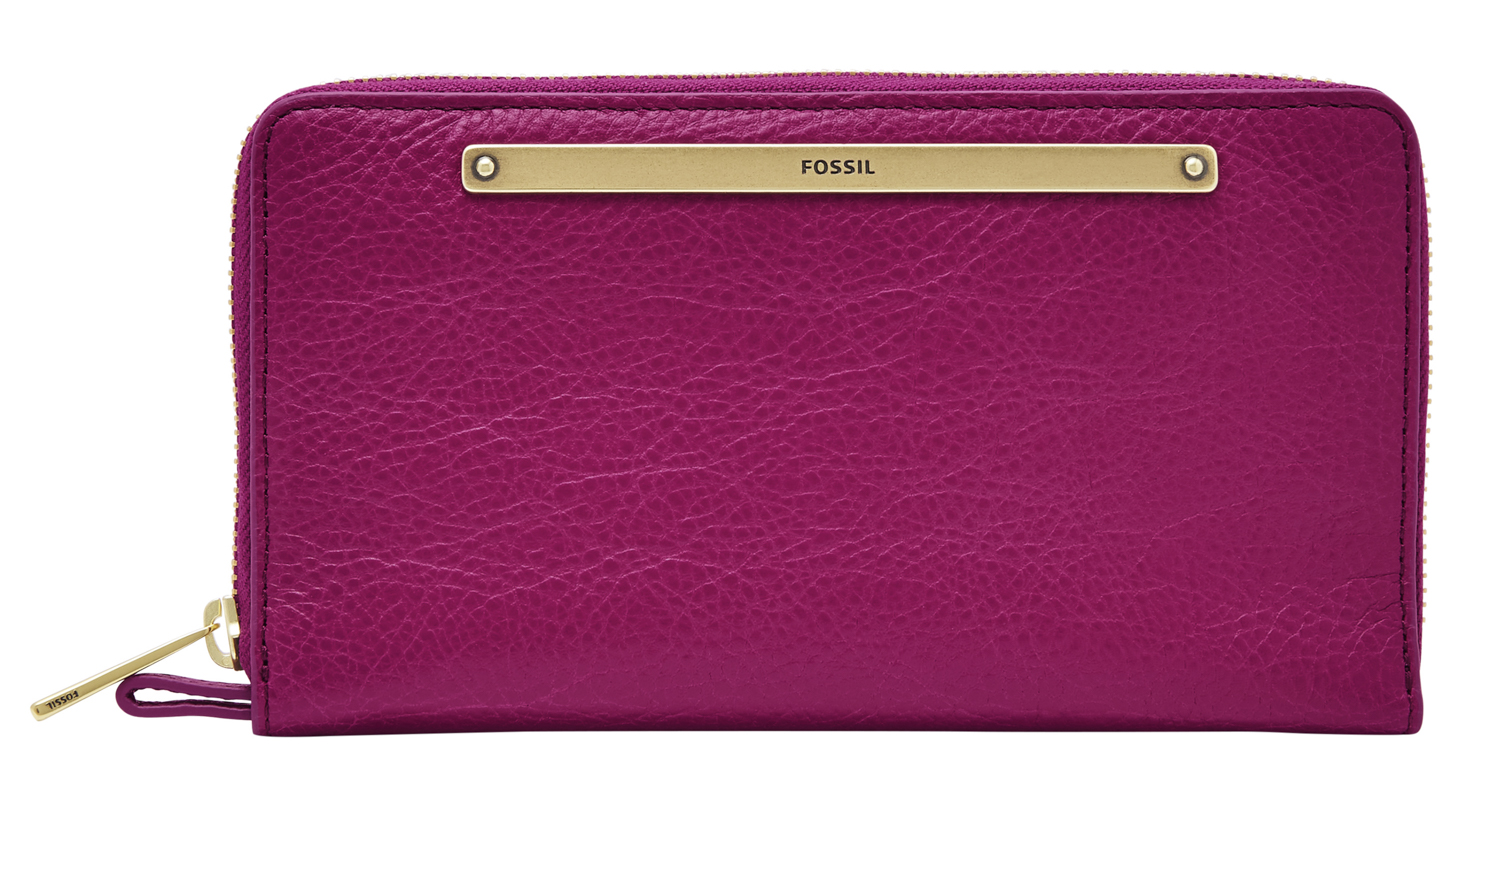 FOSSIL Liza Zip Around Clutch Magenta | Buy bags, purses & accessories ...